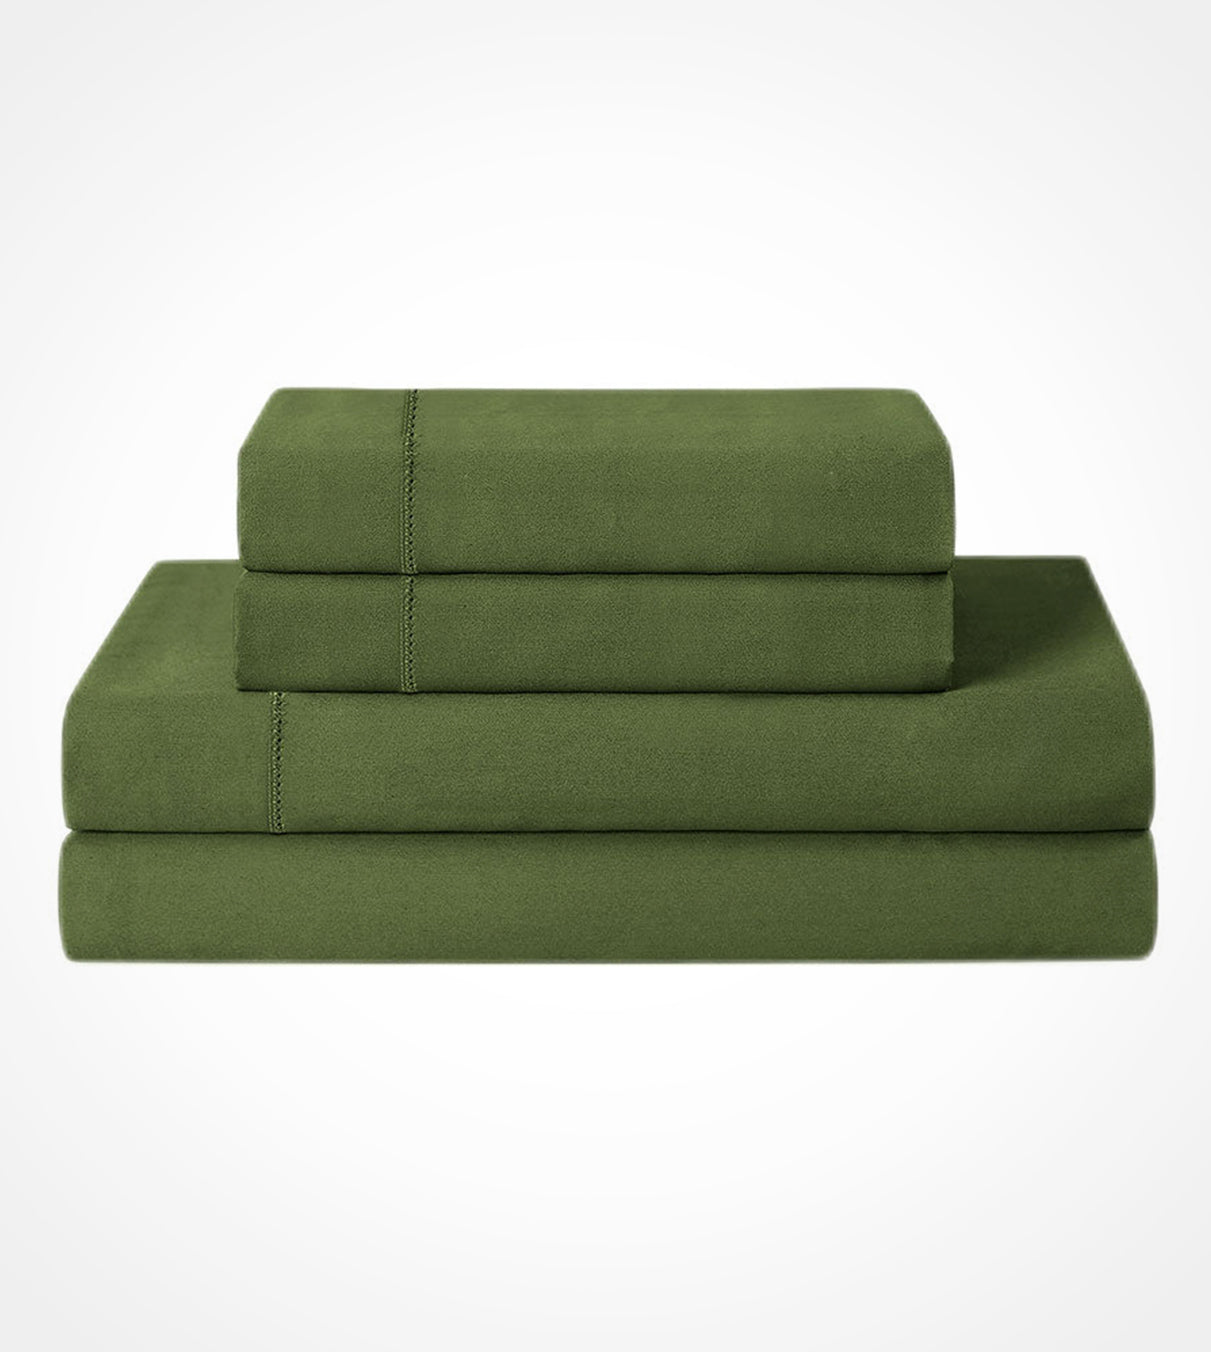 Product: Premium Microfiber Sheet Set | Color: Olive Green